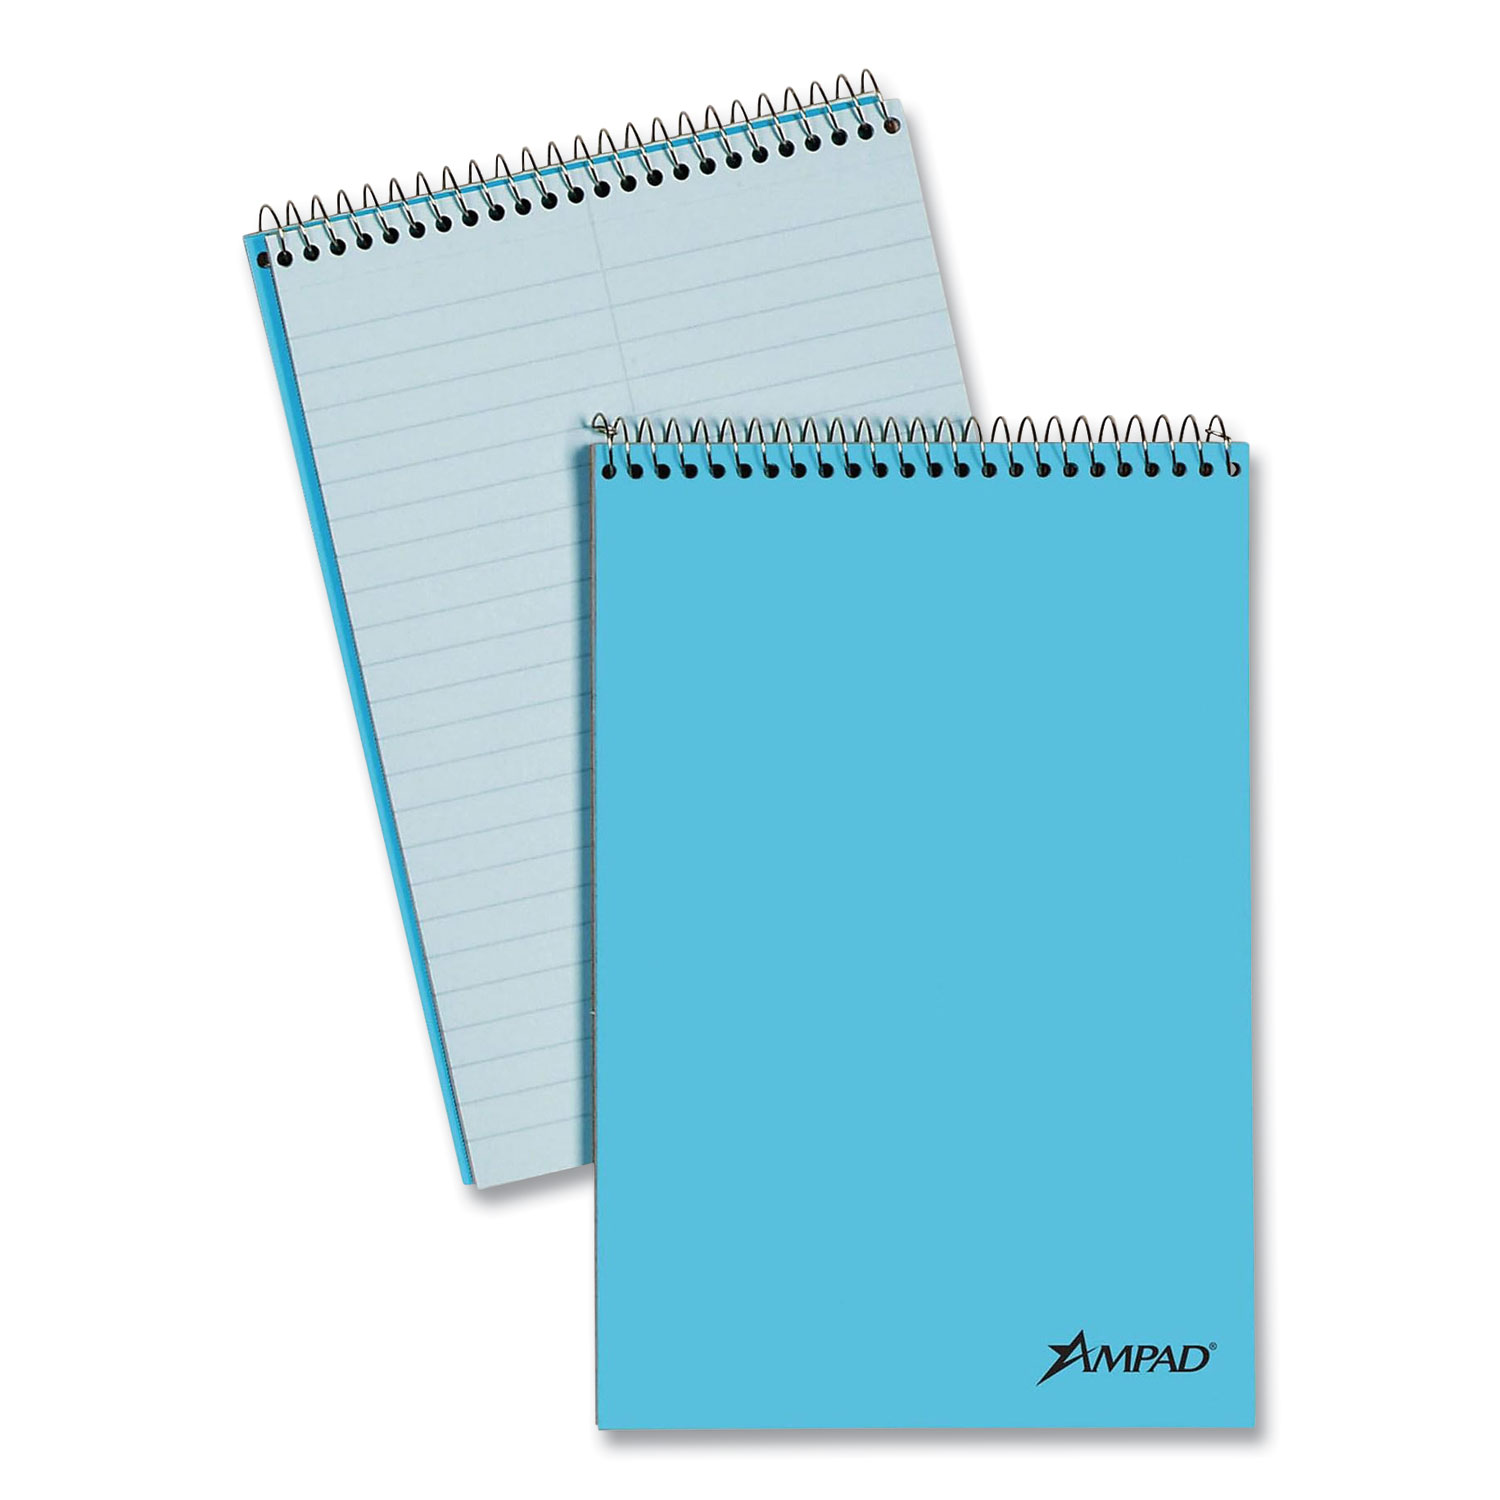  Ampad 25-286 Steno Books, Pitman Rule, Blue Cover, 6 x 9, 80 Green Tint Sheets (AMP800979) 